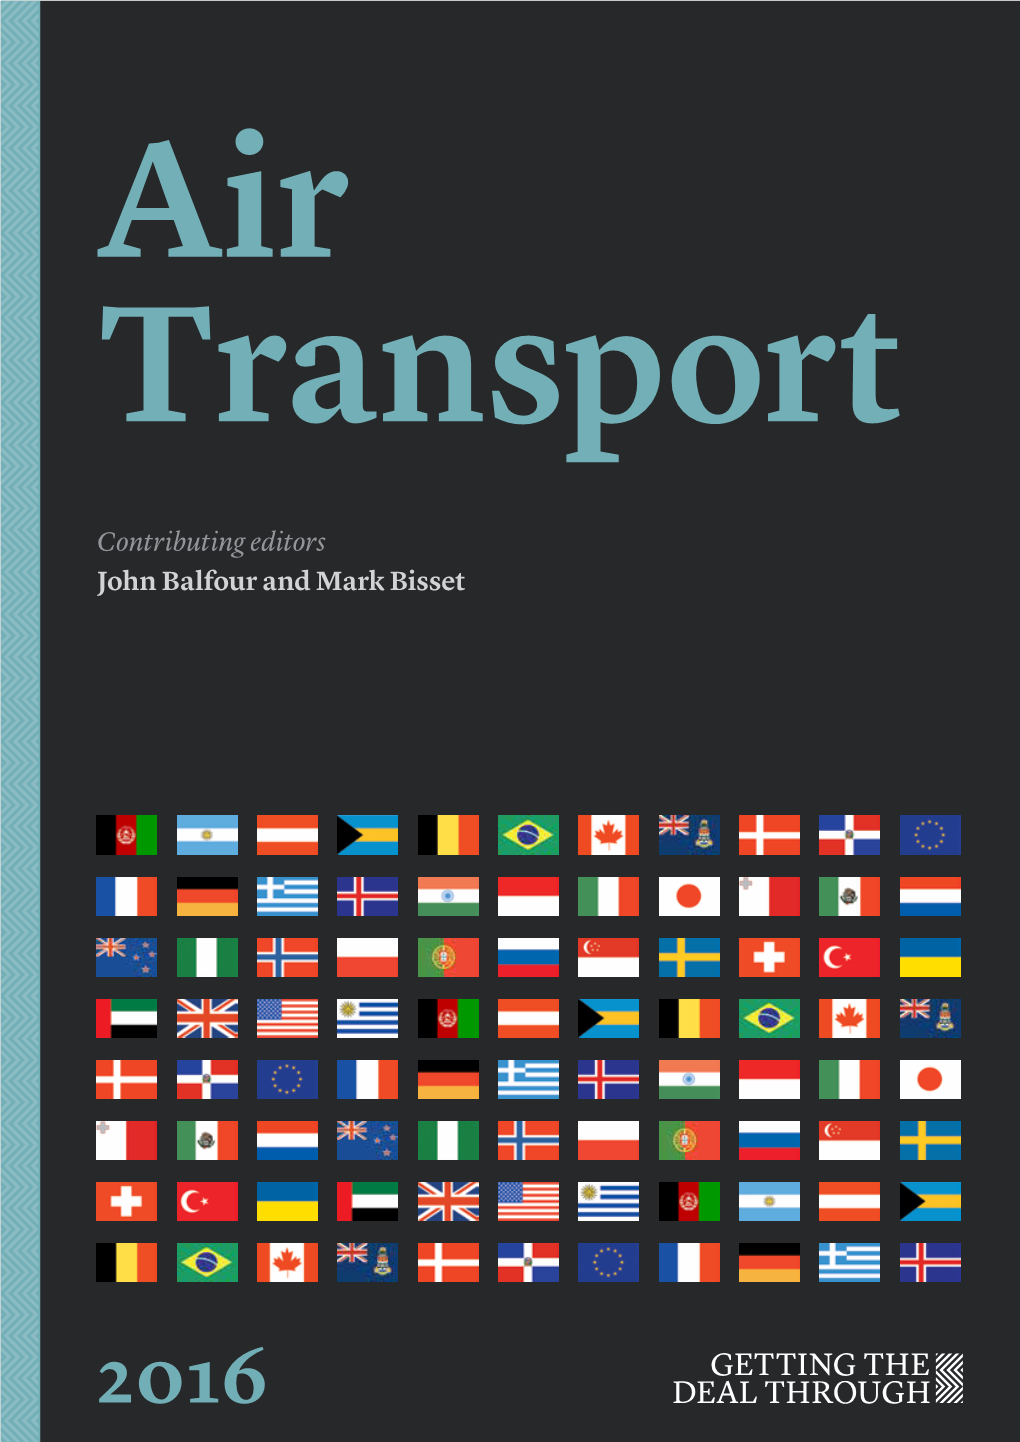 Air Transport 2016 Contributing Editors John Balfour and Mark